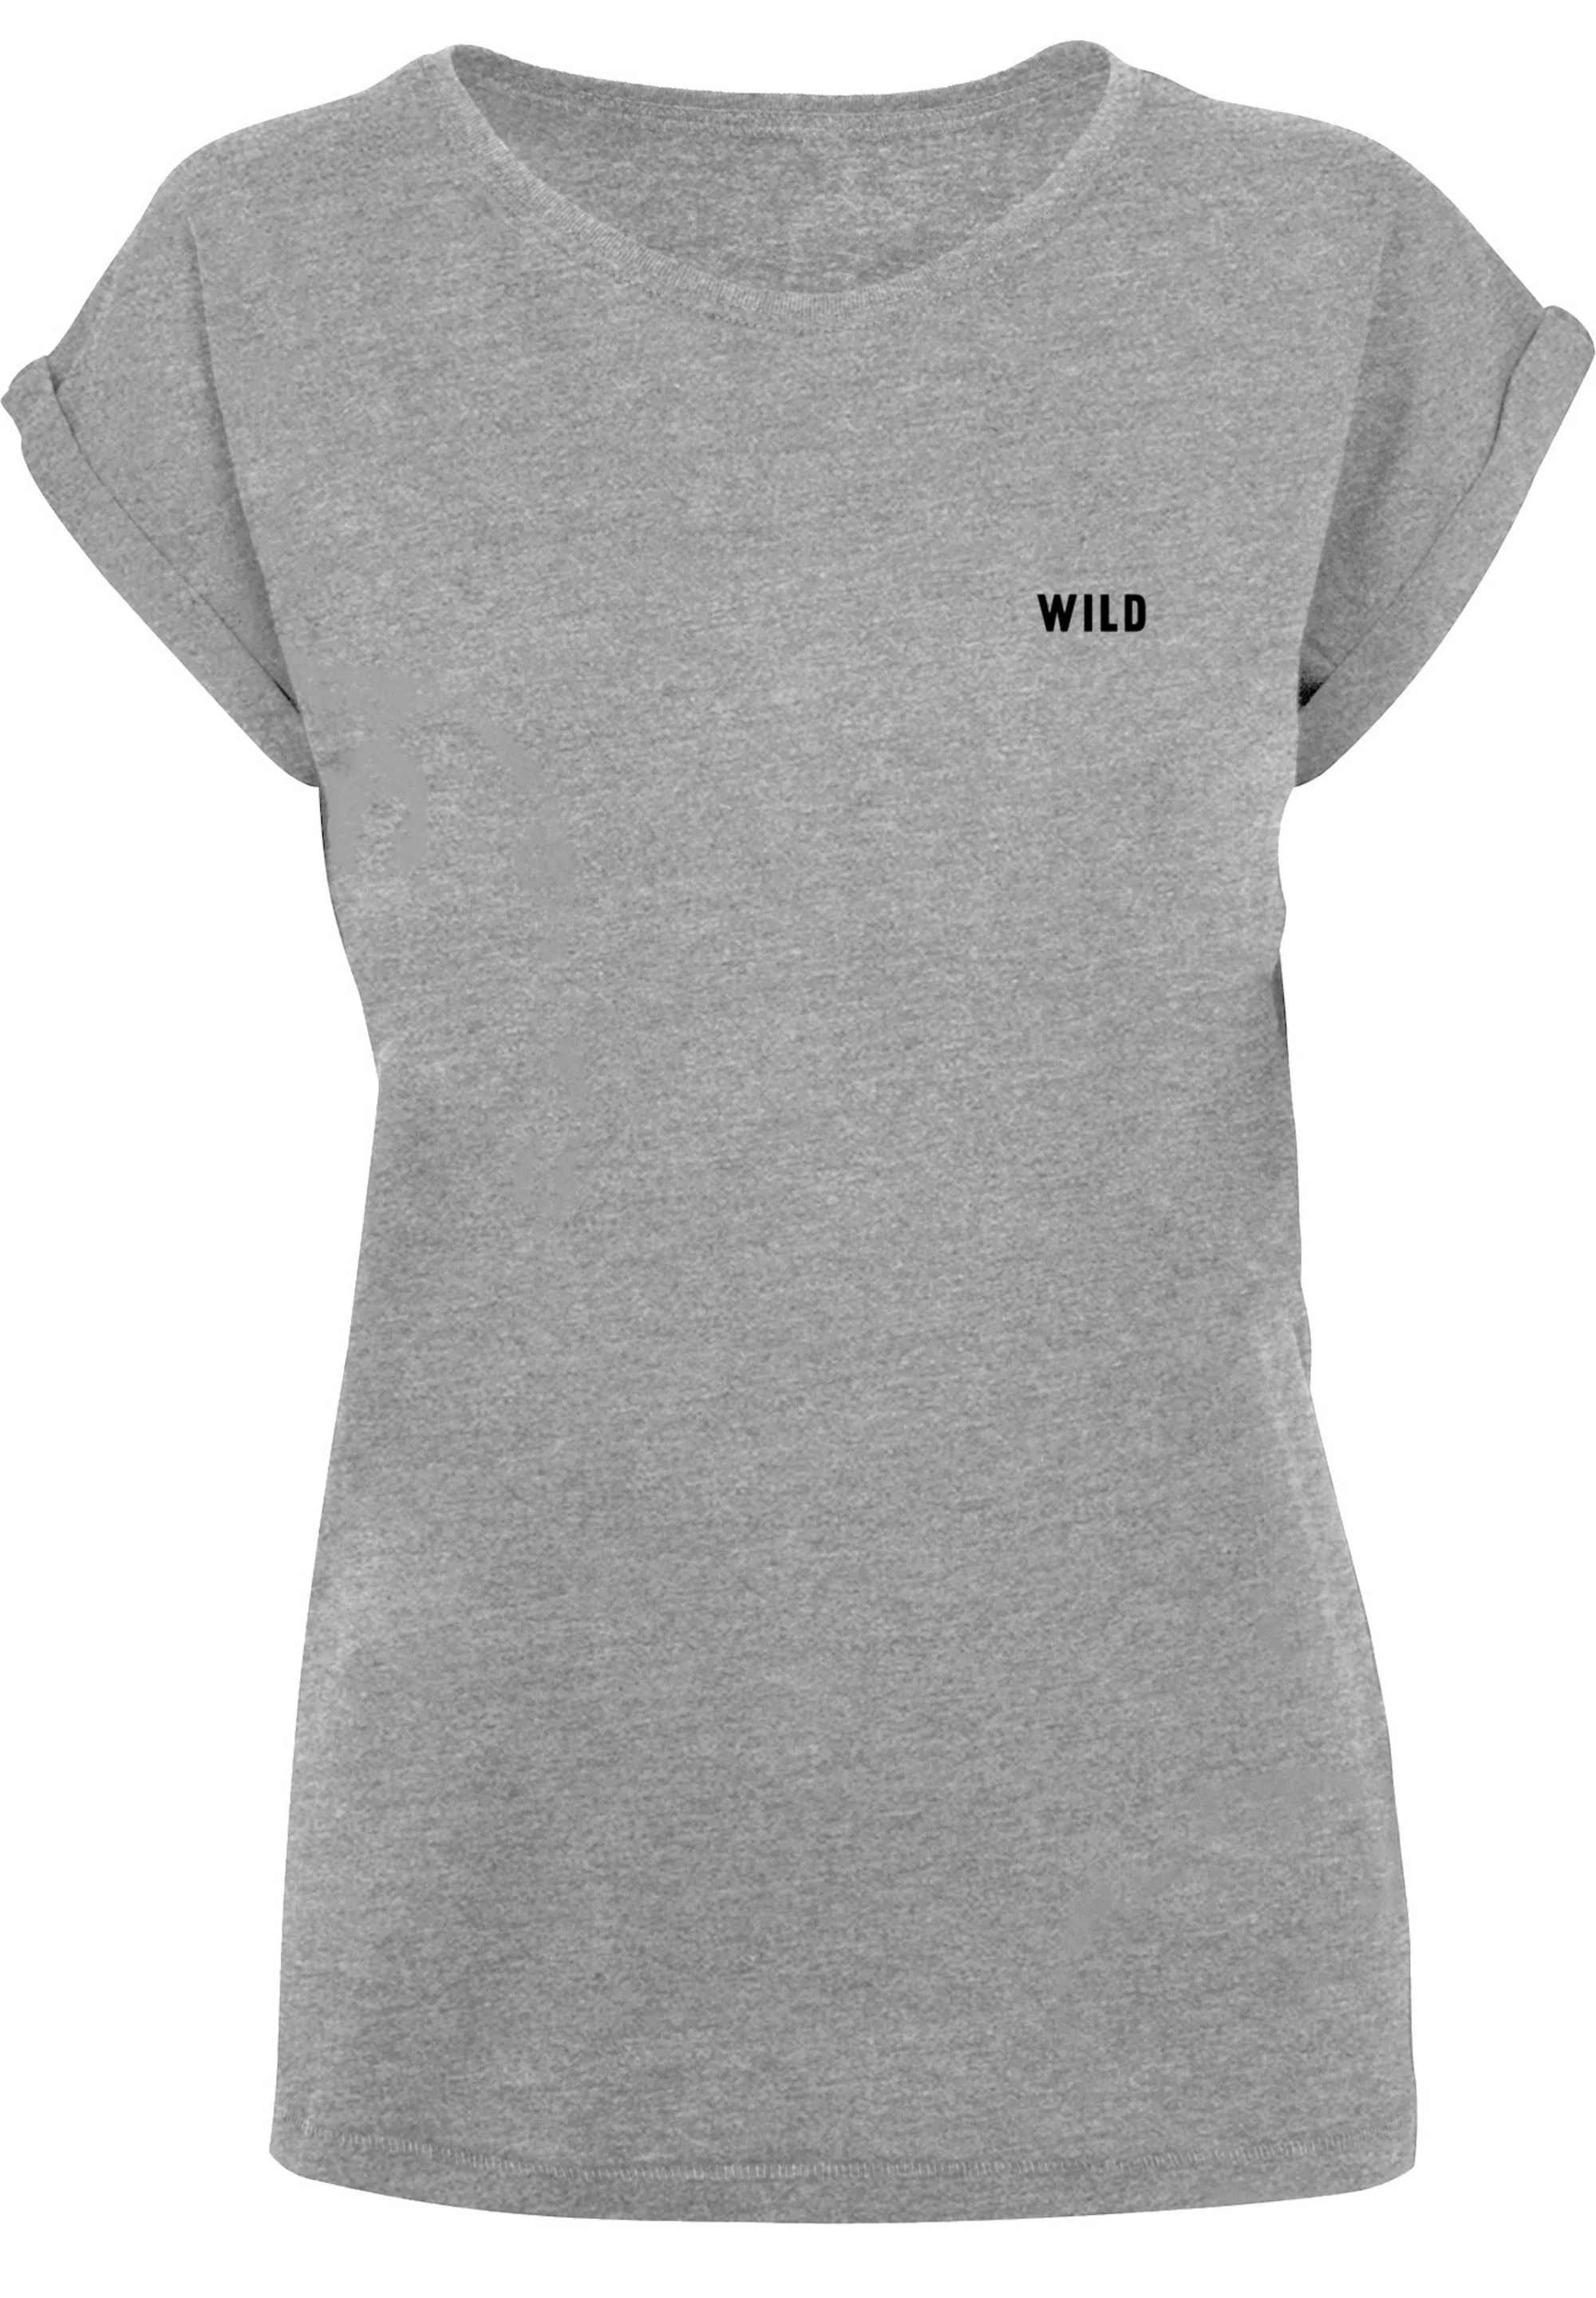 F4NT4STIC T-Shirt "Wild", Jugendwort 2022, slang günstig online kaufen